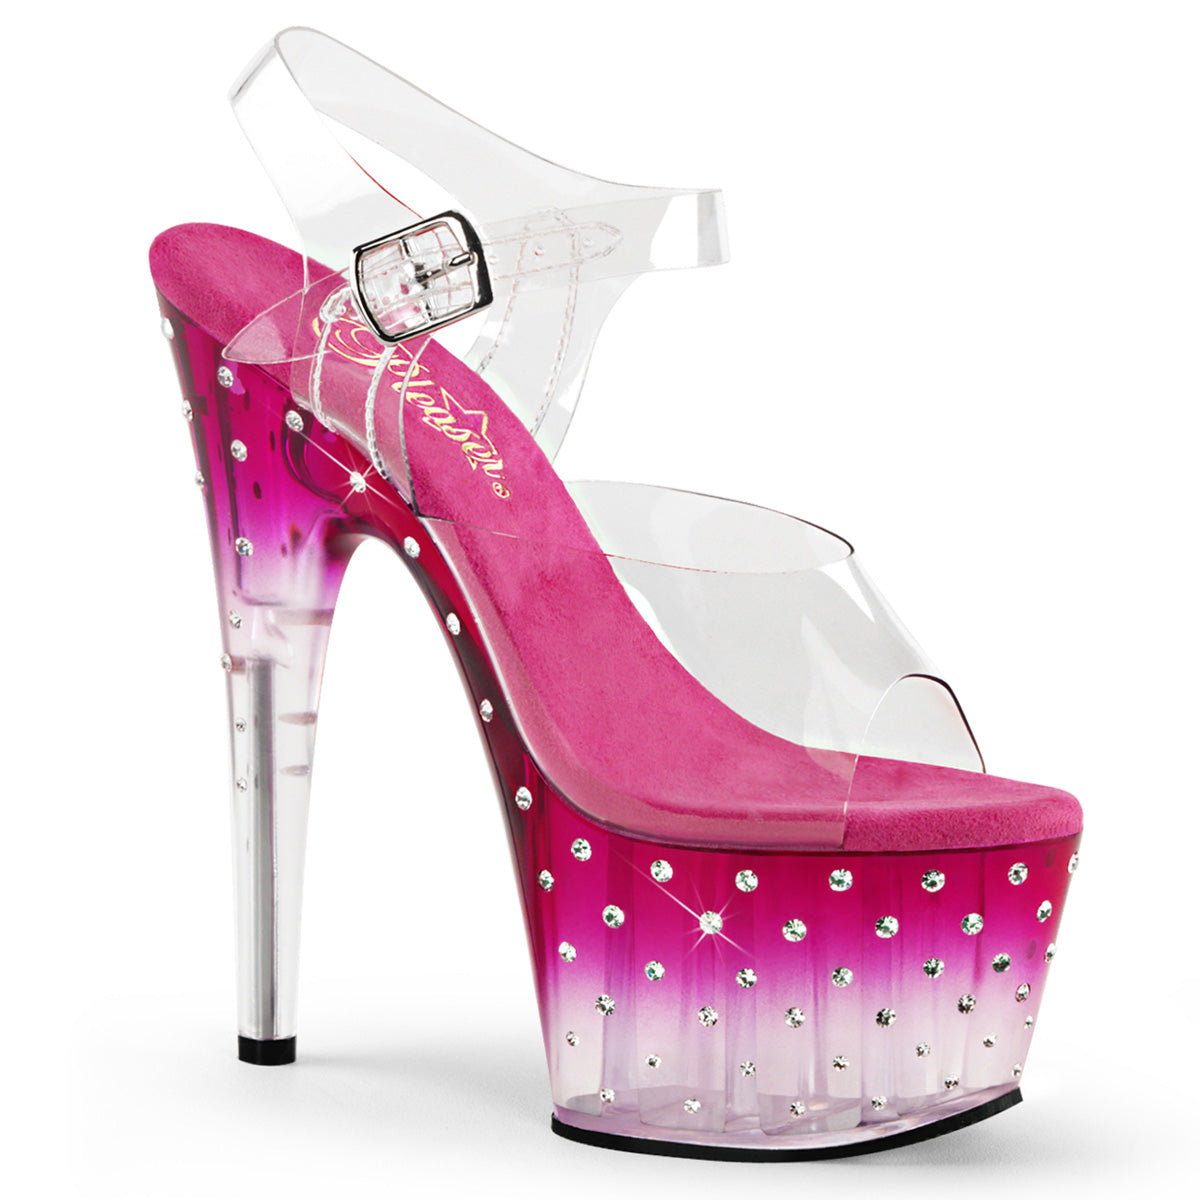 STARDUST-708T 7" Heel Clear and Pink Pole Dancer Platform Shoes